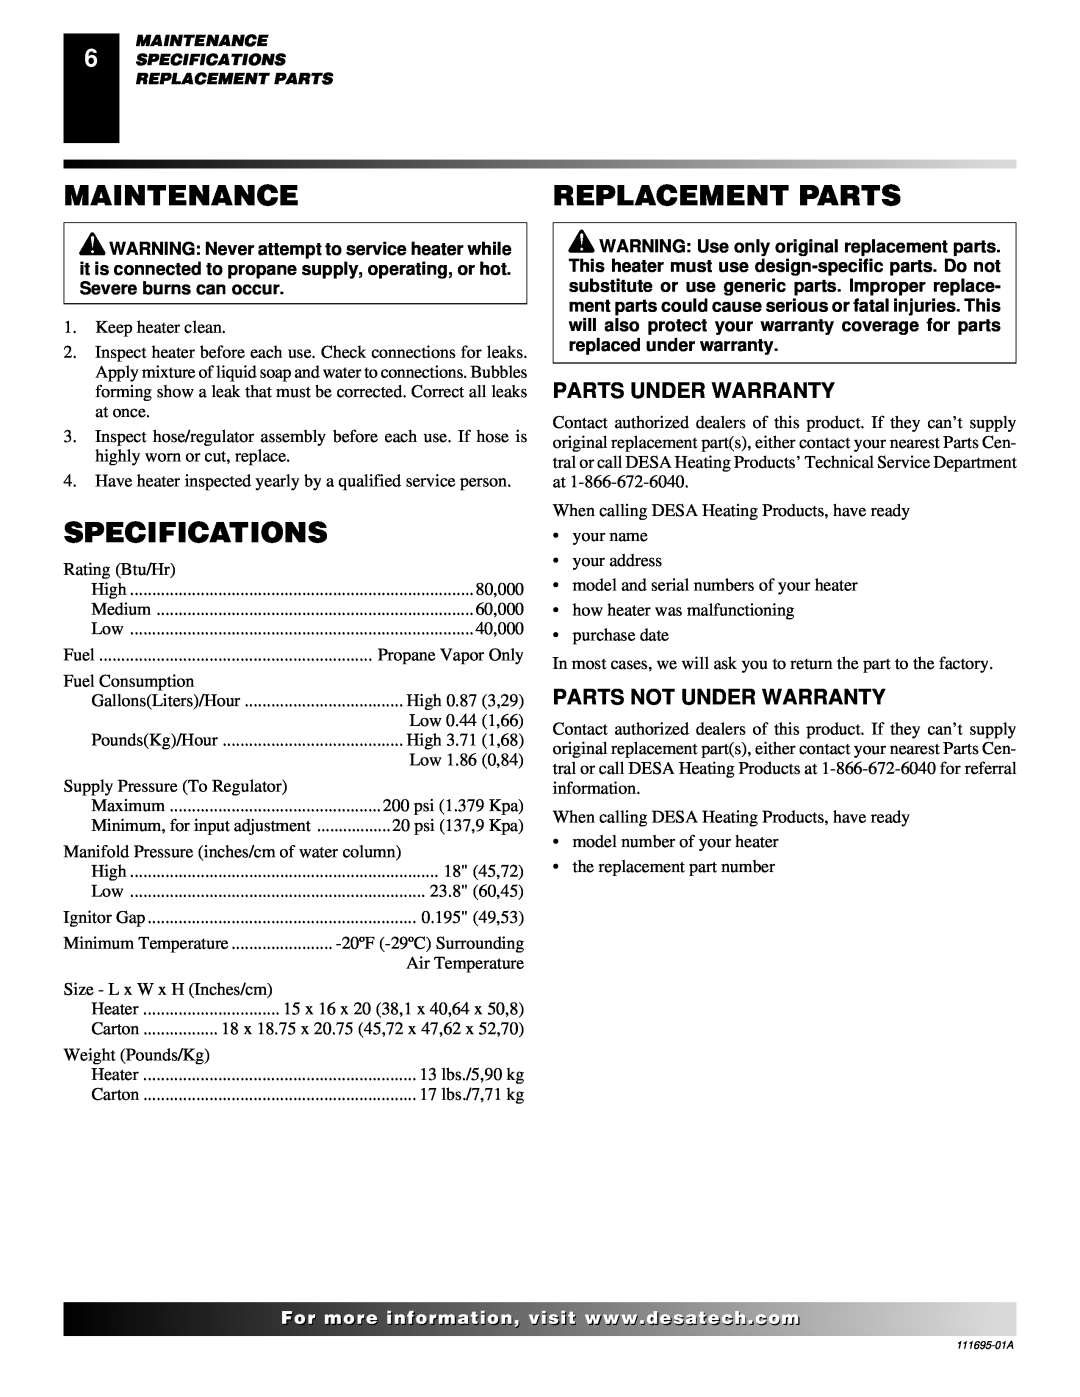 Desa 000 Btu/hr Models Maintenance, Replacement Parts, Specifications, Parts Under Warranty, Parts Not Under Warranty 